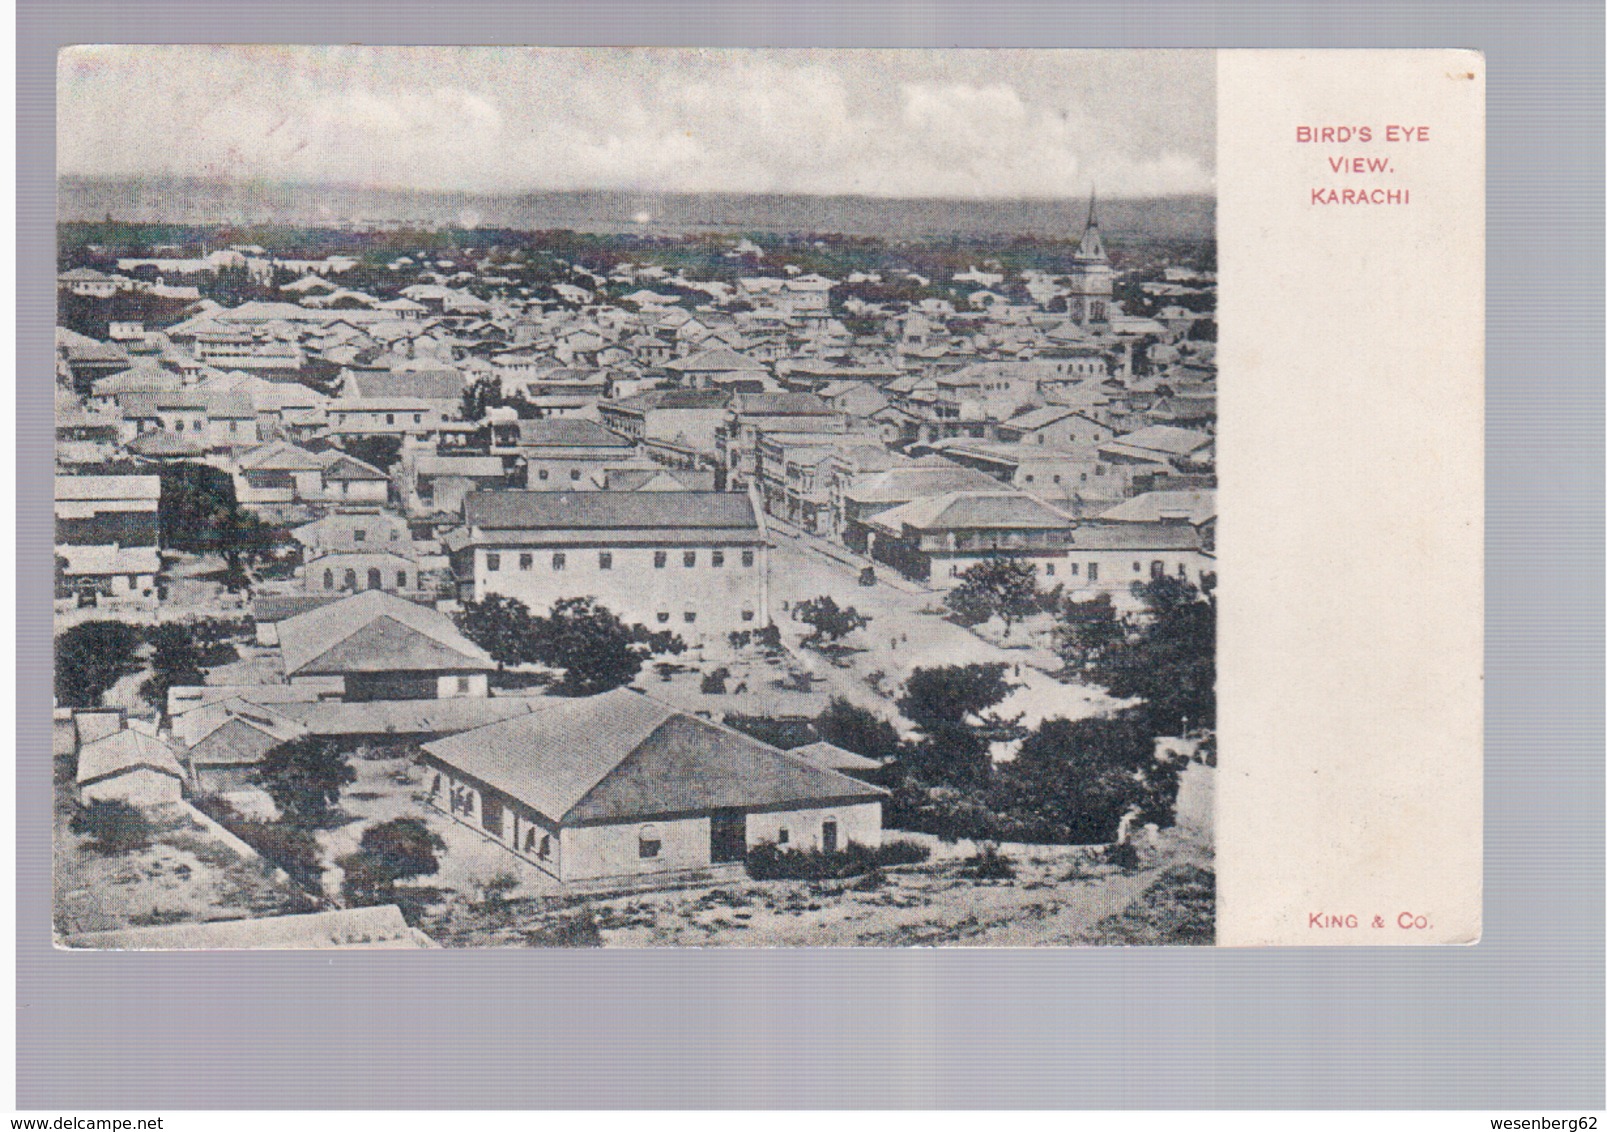 PAKISTAN Bird's Eye View. Karachi 1910 Old Postcard - Pakistan